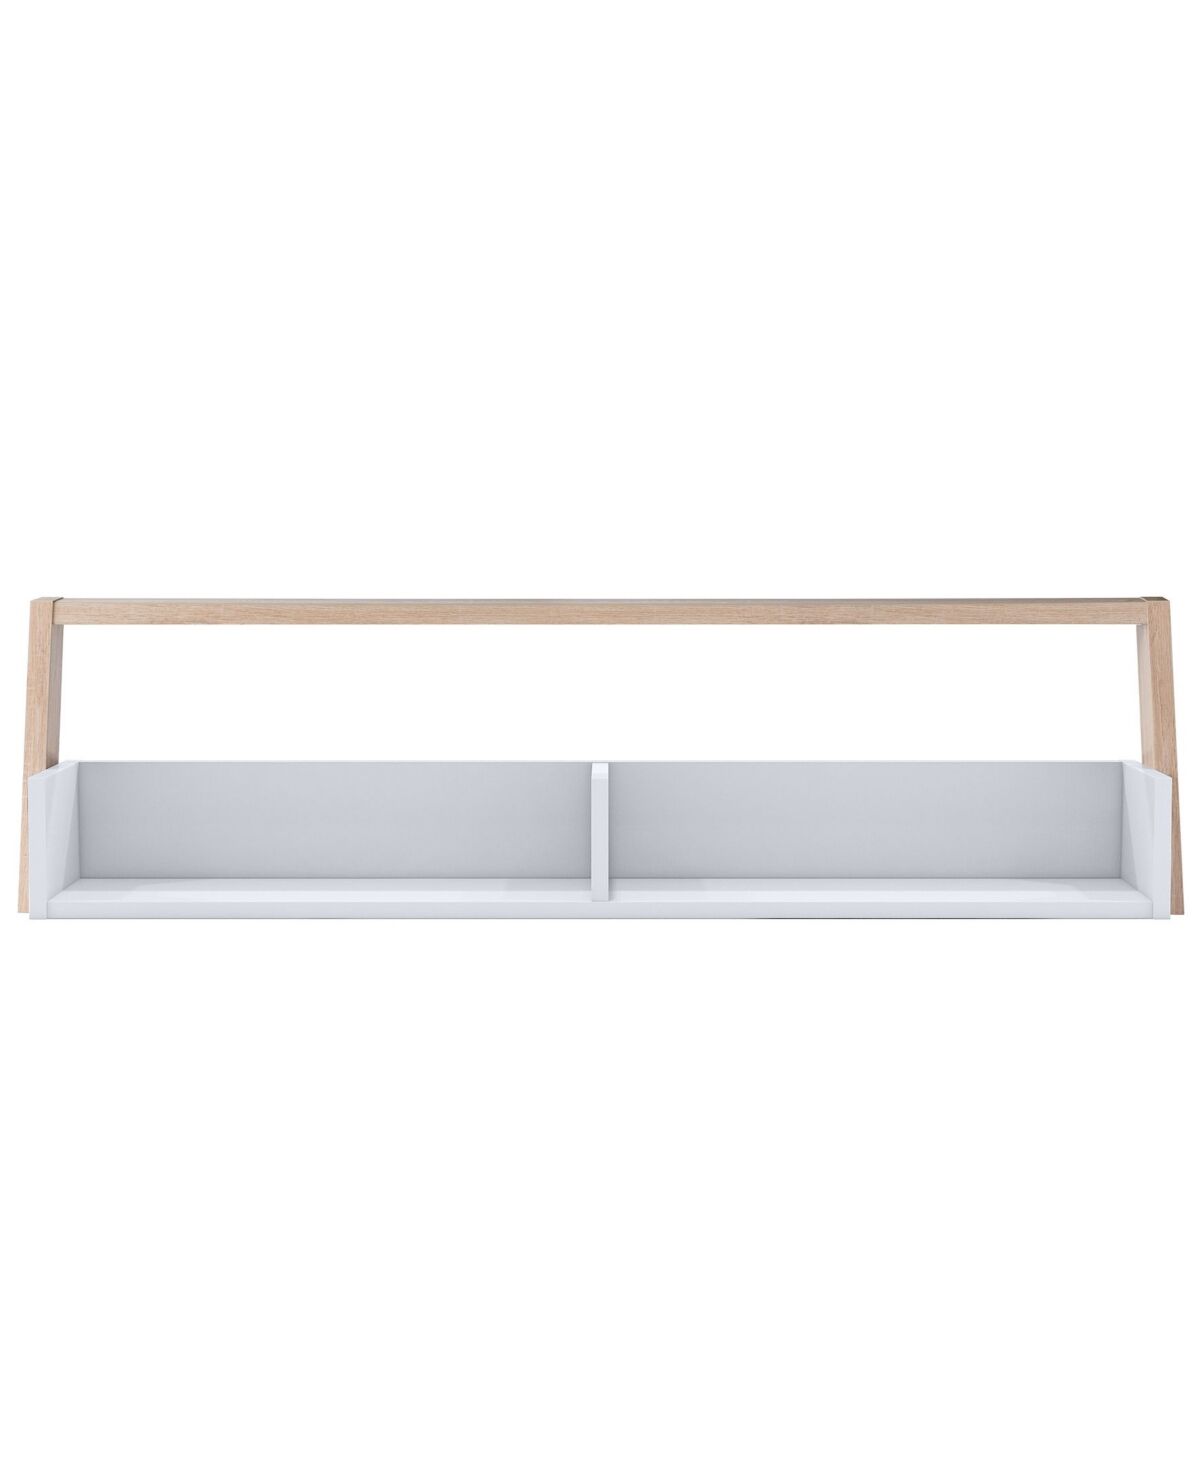 Furniture Of America Dellmara 2 Shelves Wall Shelf - White, Weathered White